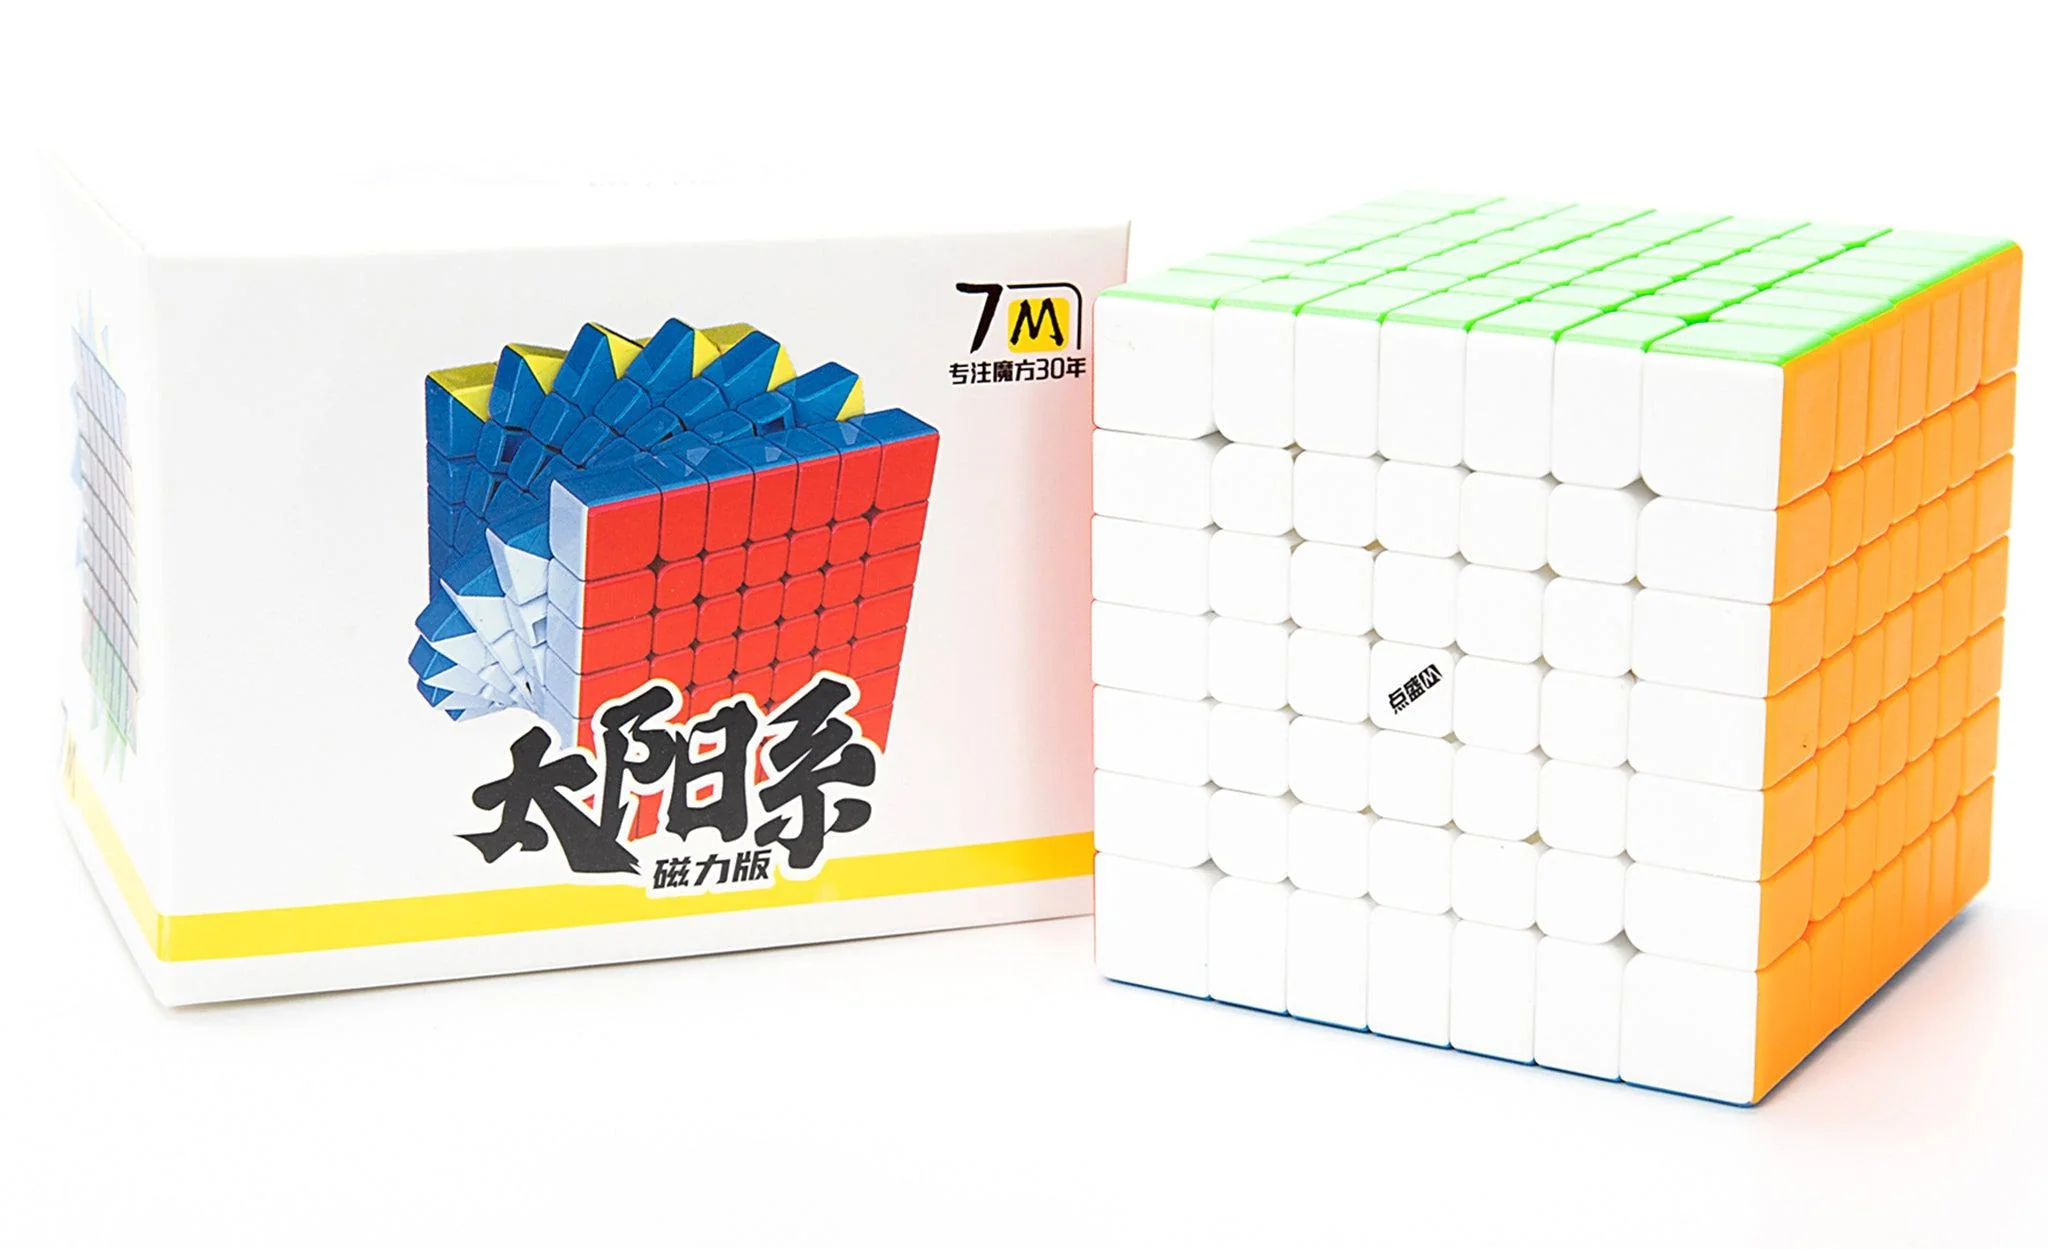 7x7-Speed-Cubes